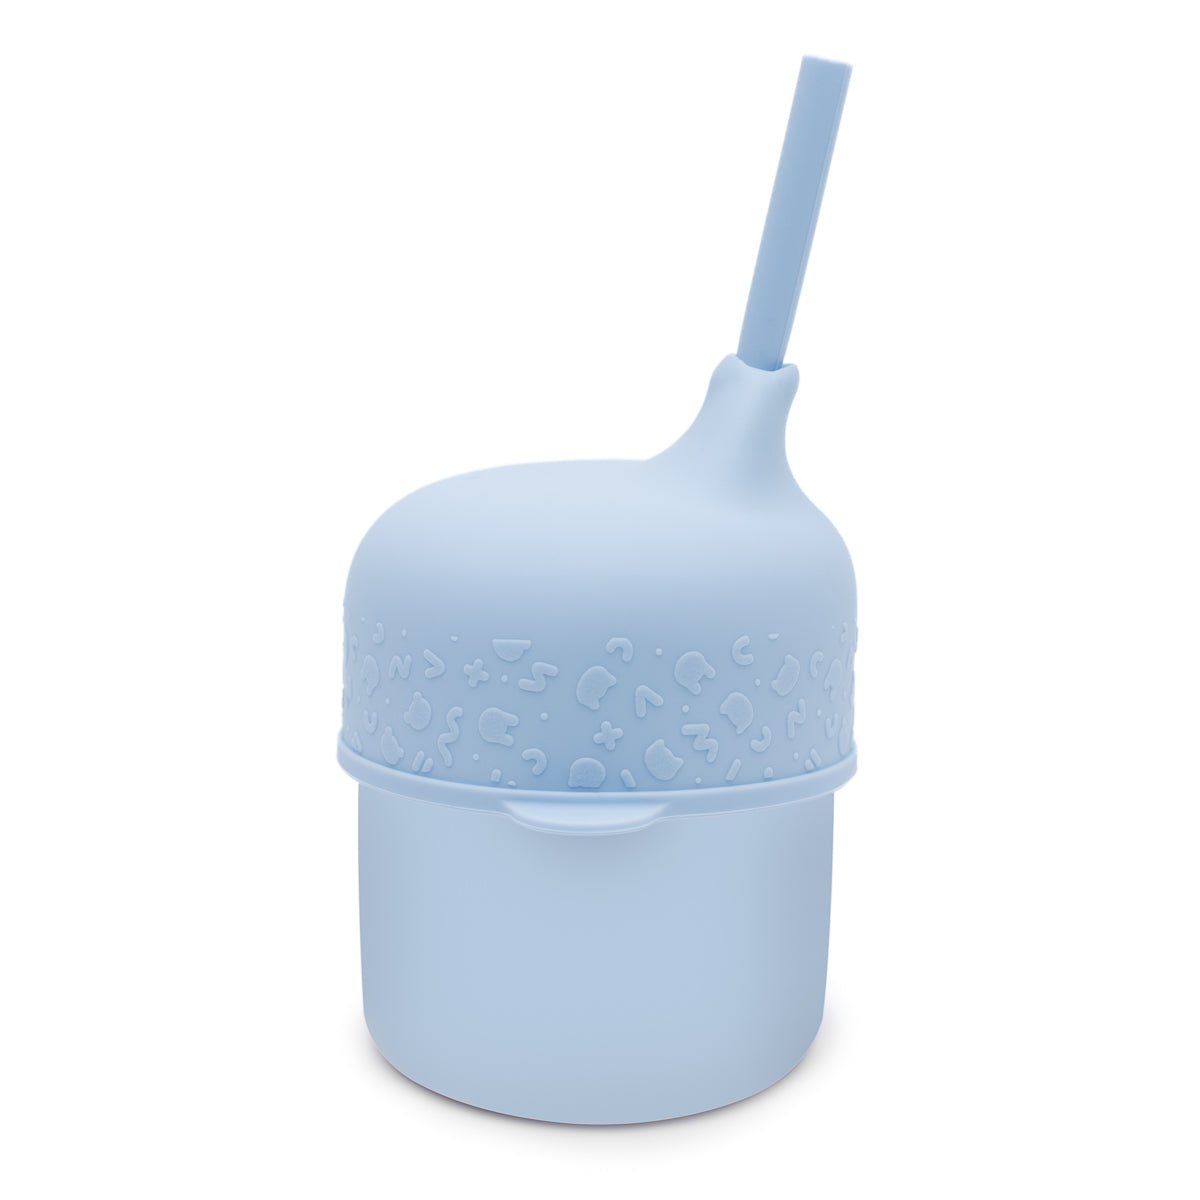 Sippie Cup Set in Powder Blue